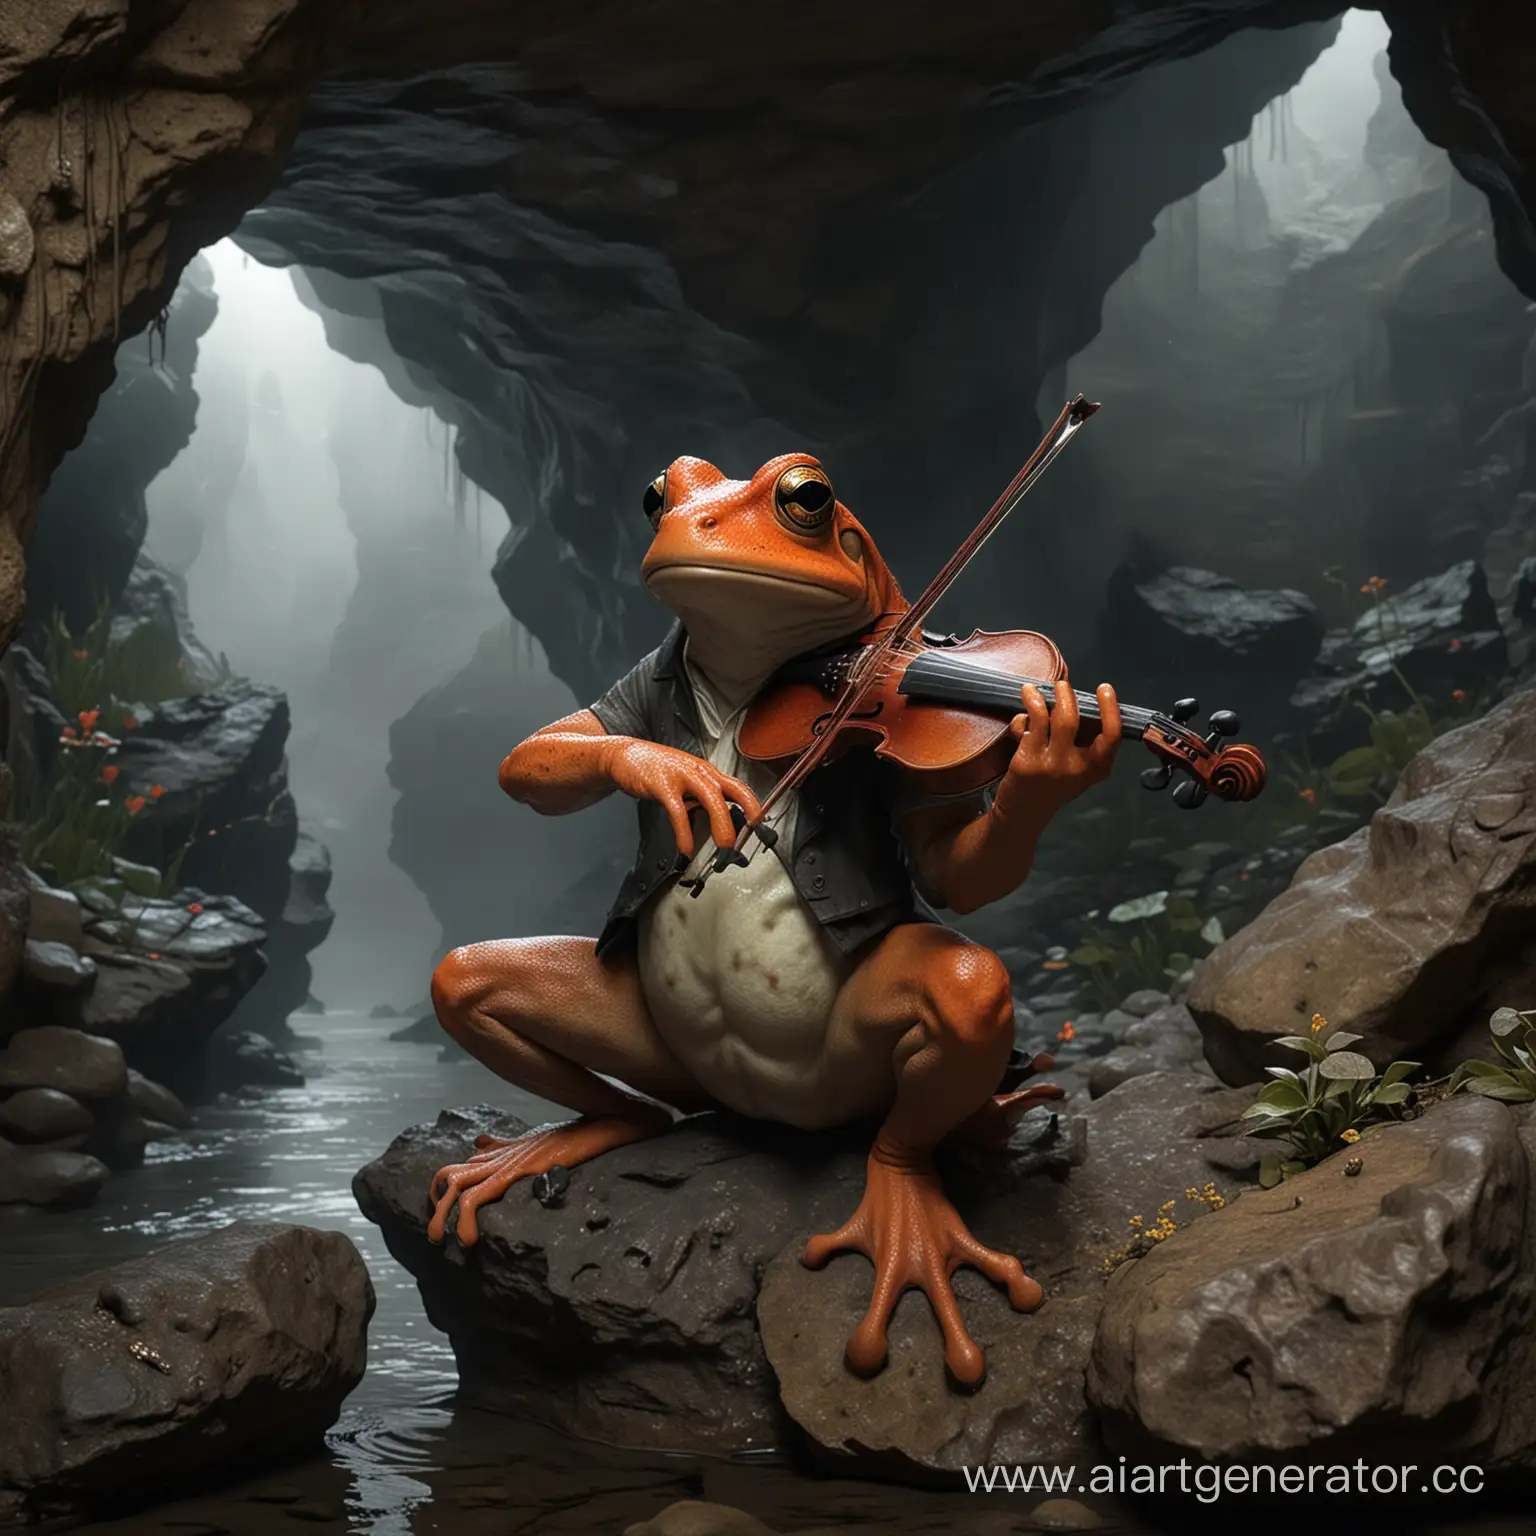 Enchanting-RedSkinned-Frog-Bard-Playing-Violin-in-Dark-Cave